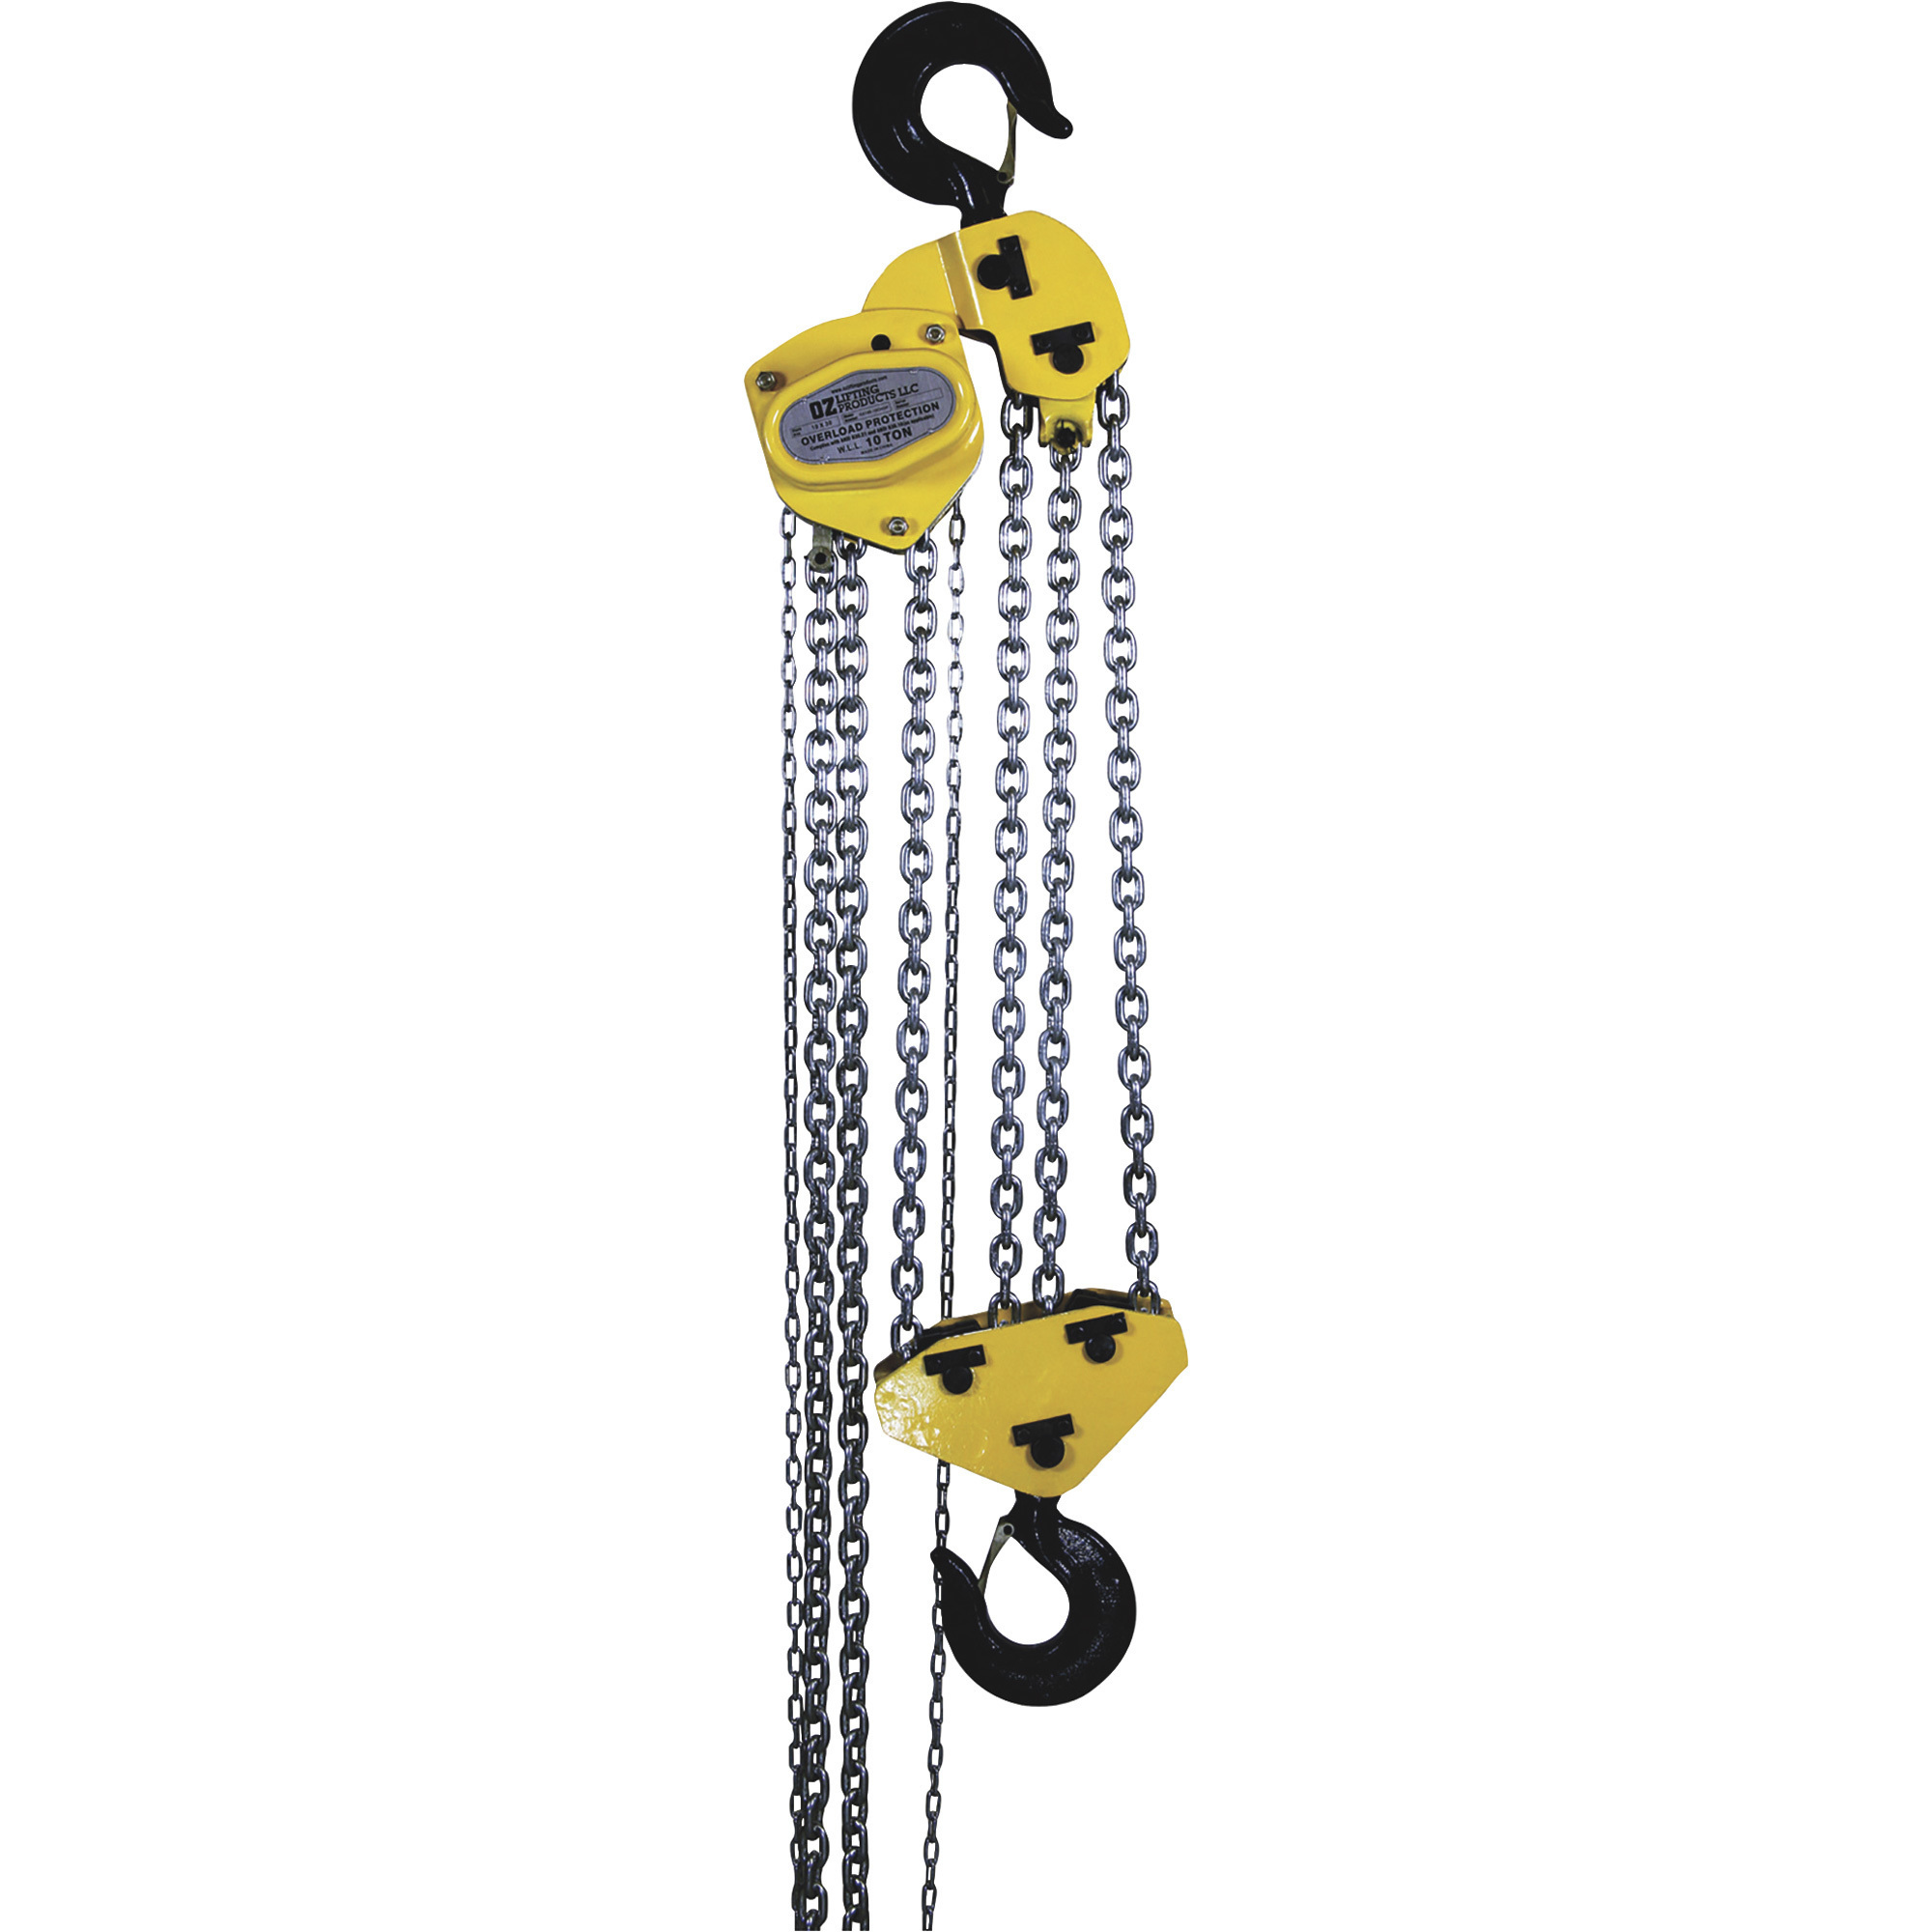 OZ Lifting Products Premium Manual Chain Hoist â10-Ton Capacity, 20ft. Lift, Model OZ100-20CHOP